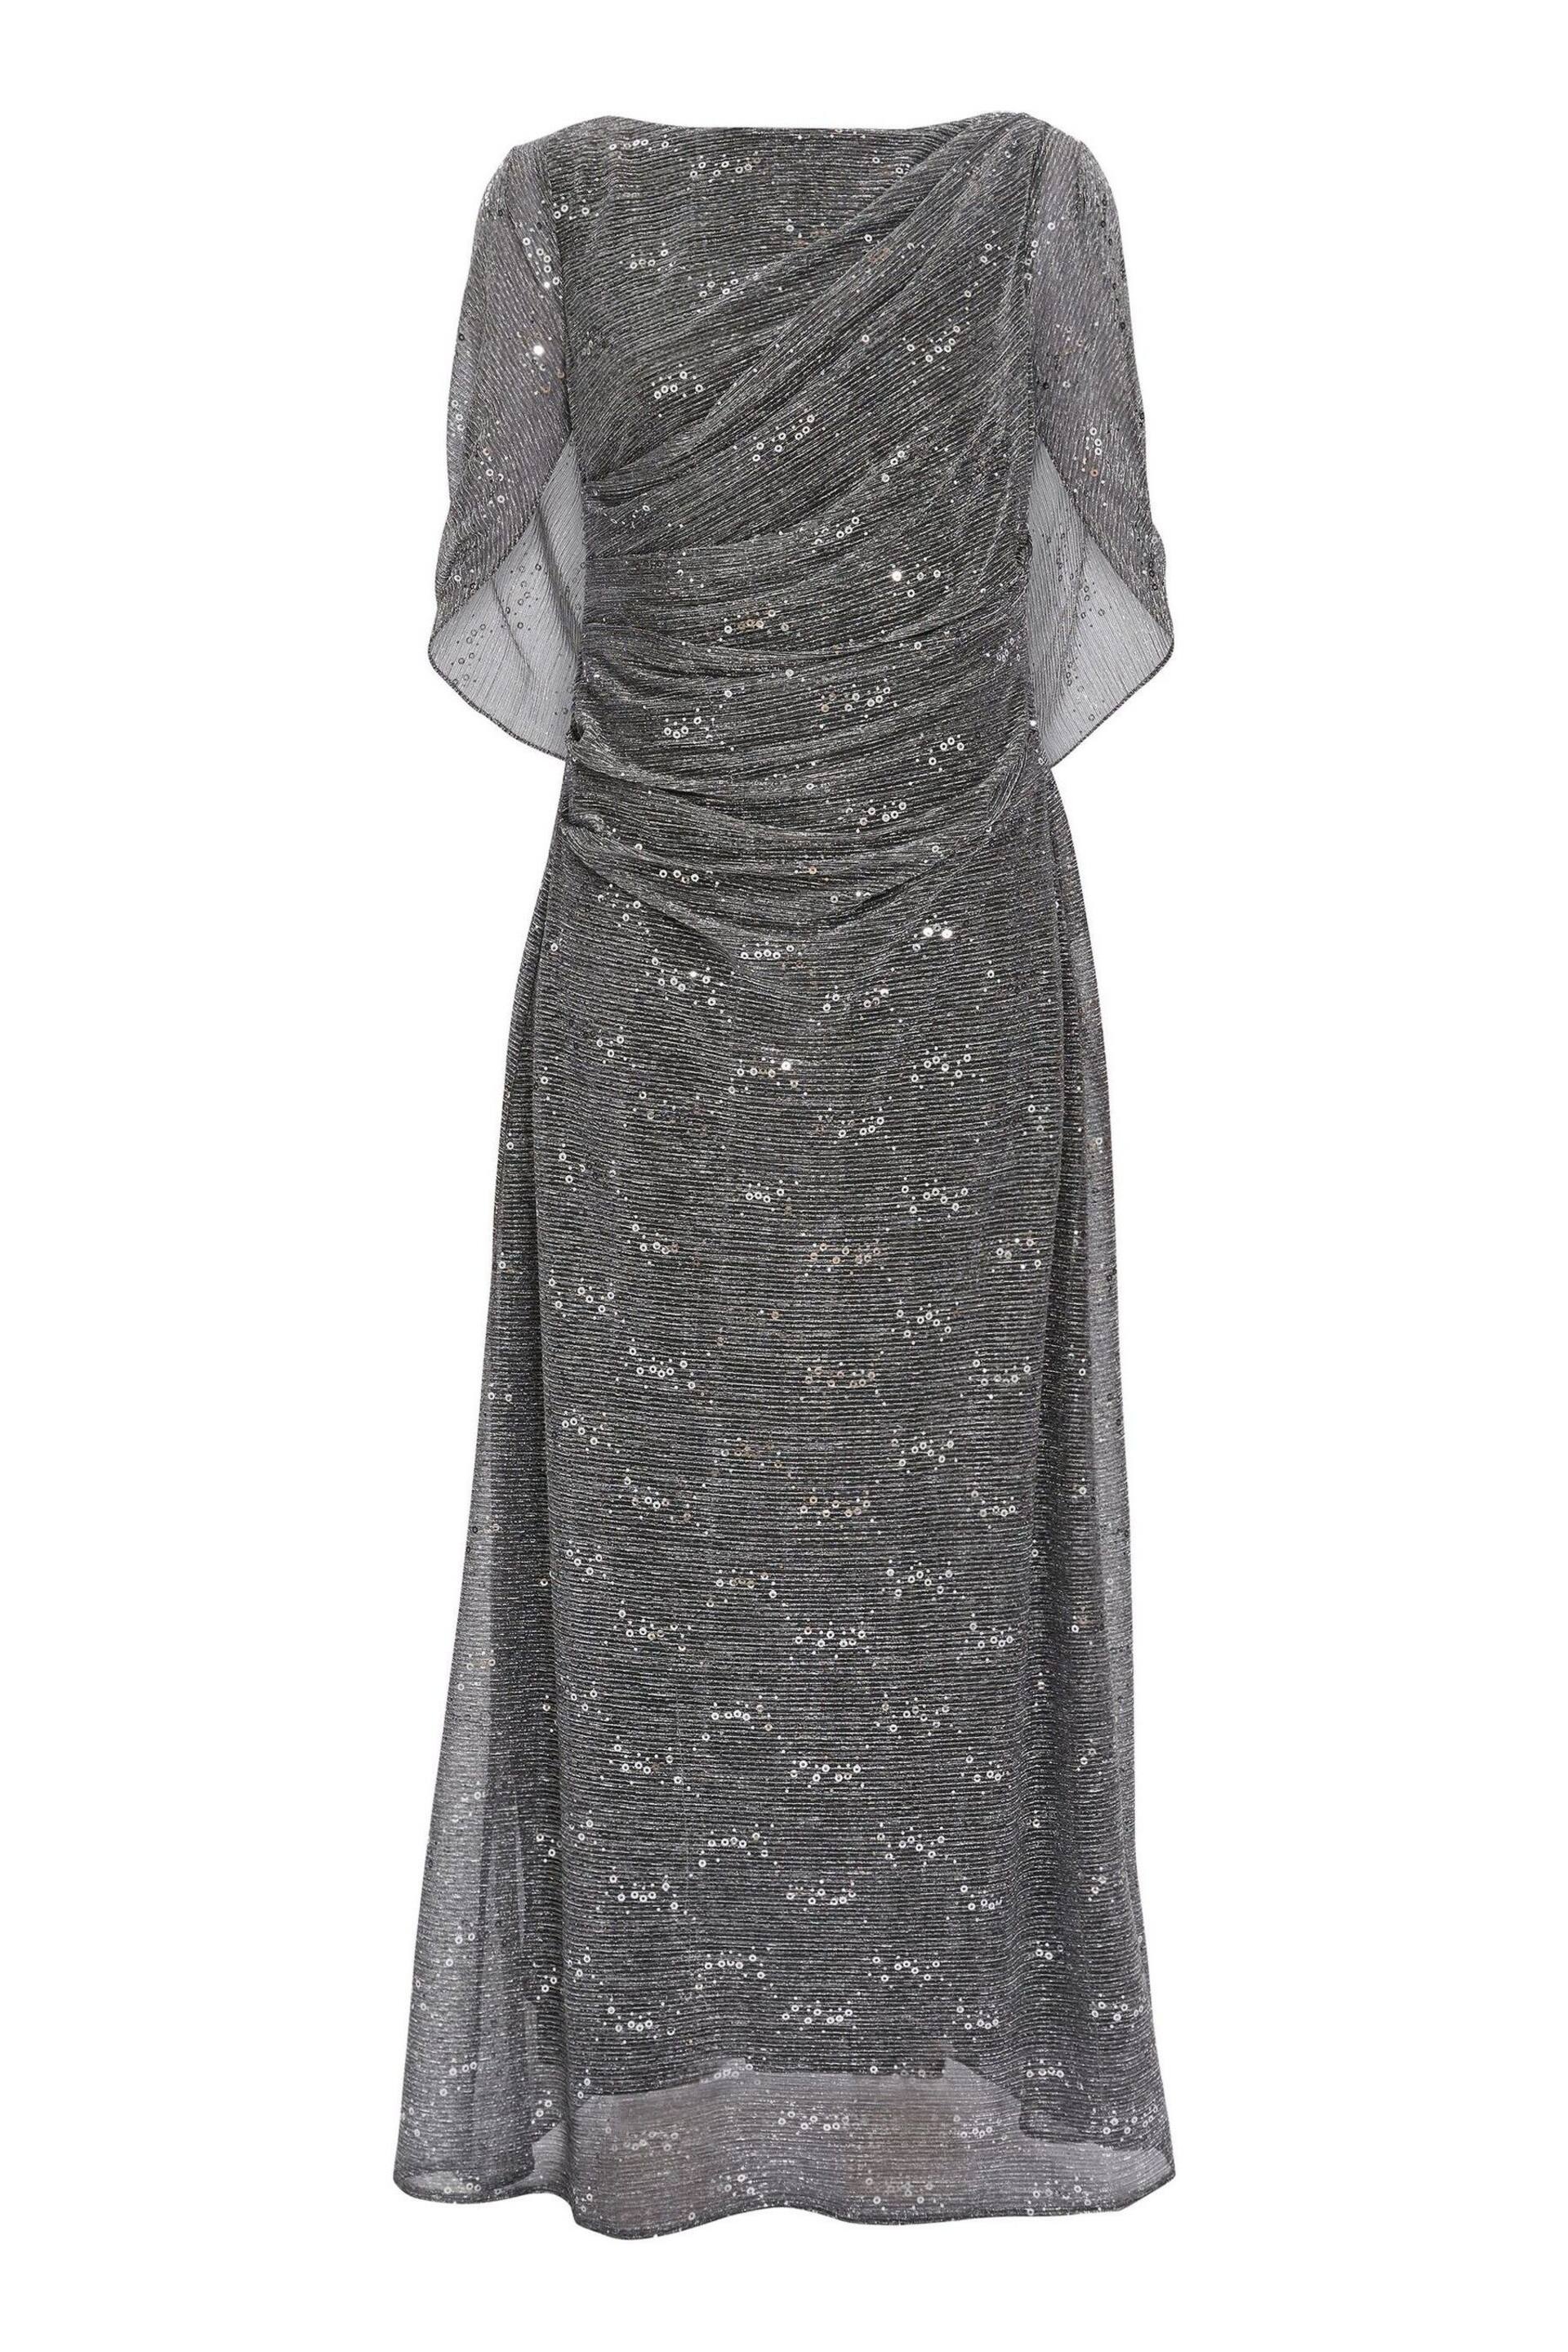 Gina Bacconi Natural Joanna Metallic Sequin Knit Maxi Dress - Image 5 of 5